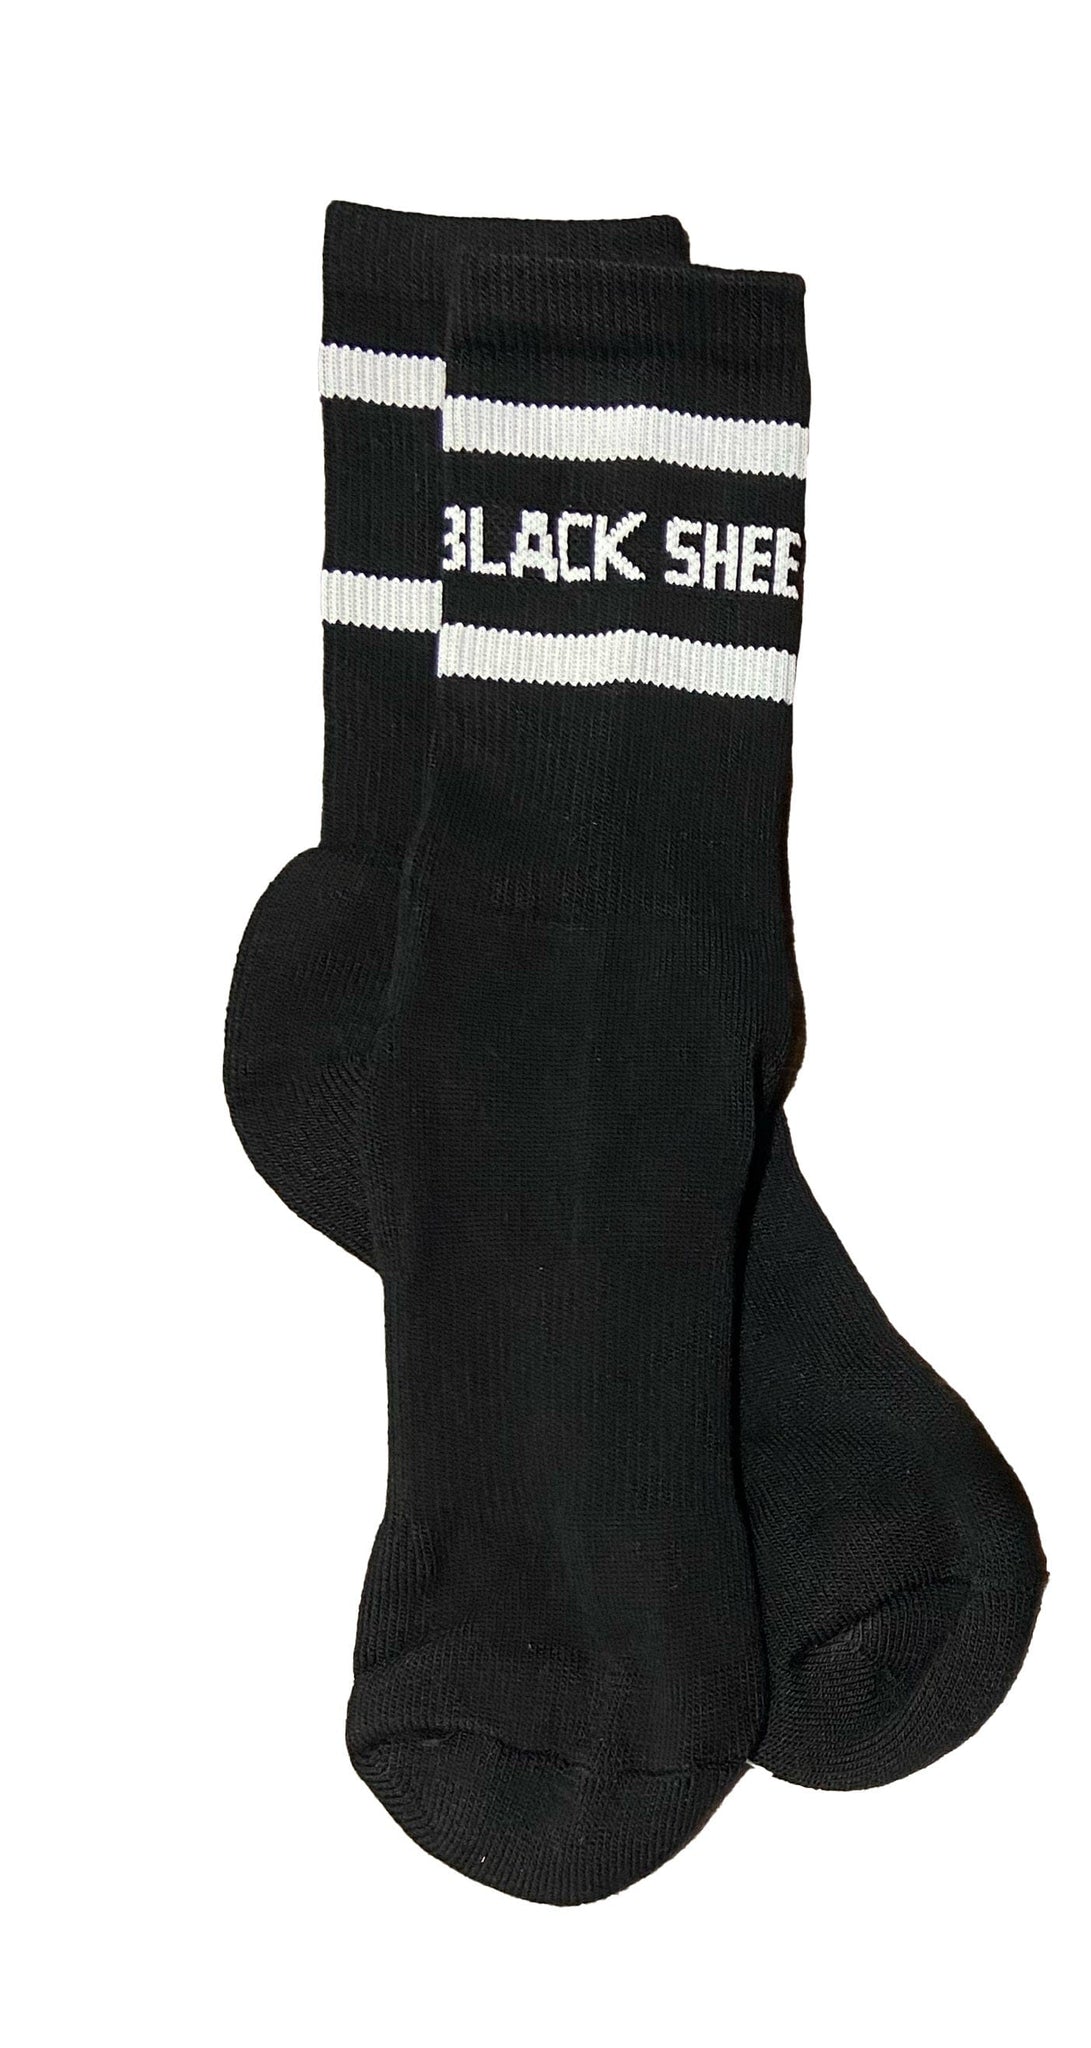 mercedestourism Black Sheep Socks